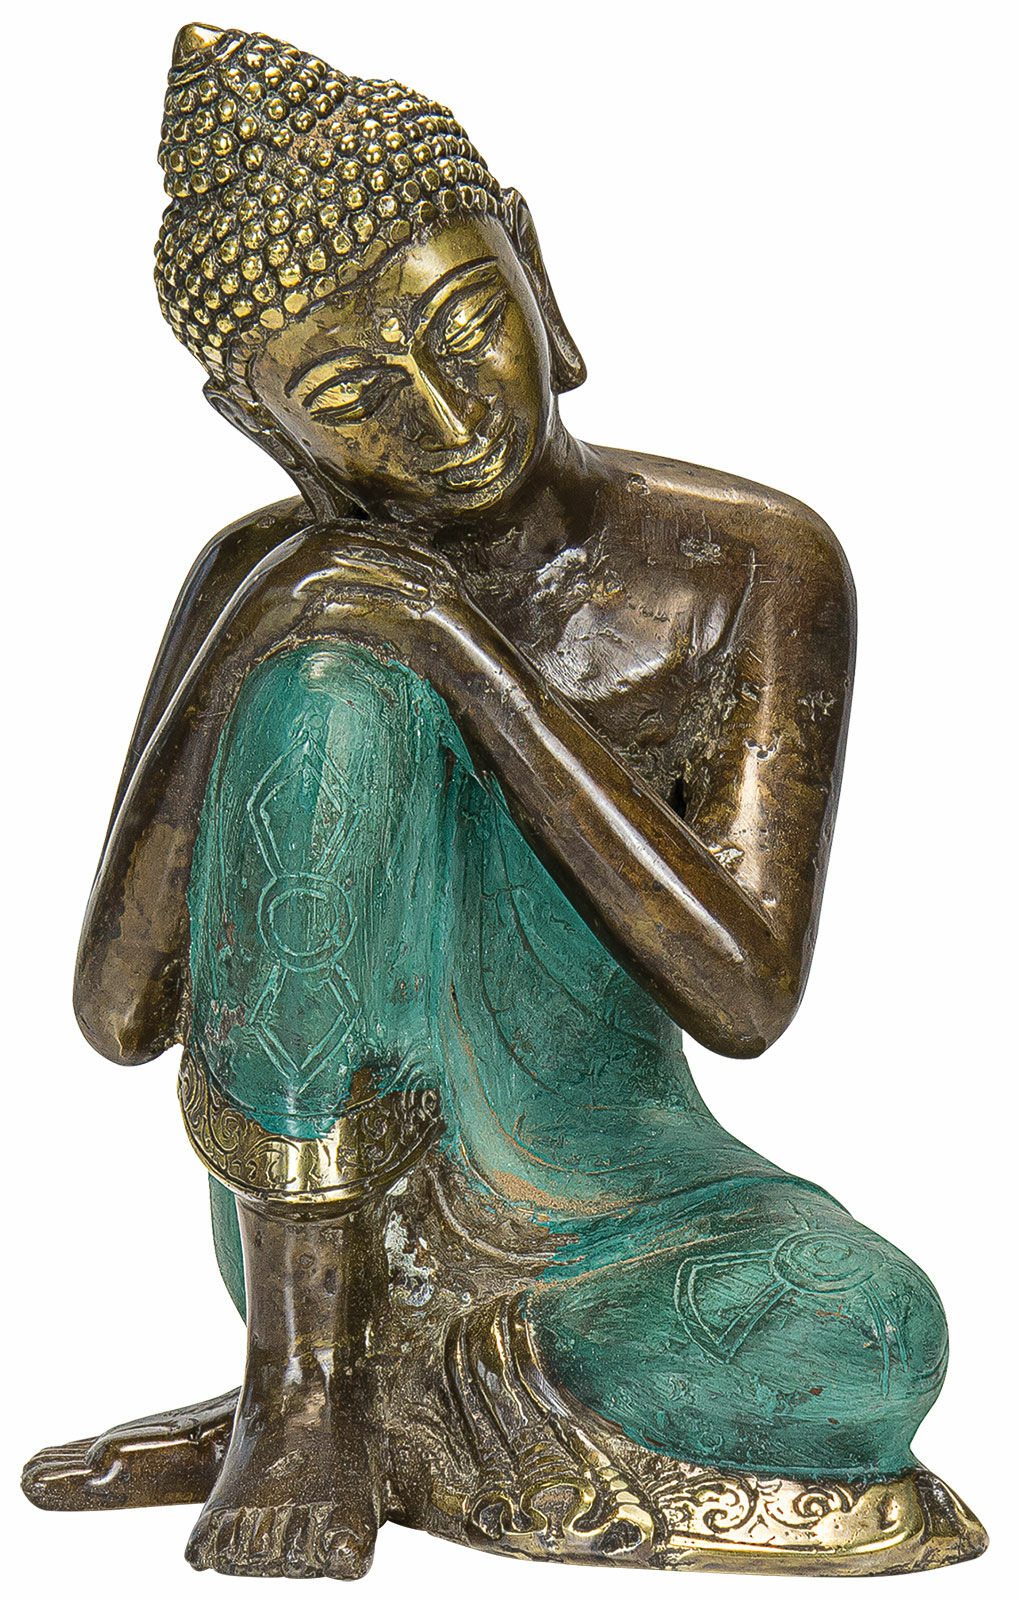 Skulptur "Hvilende Buddha", bronze antik finish